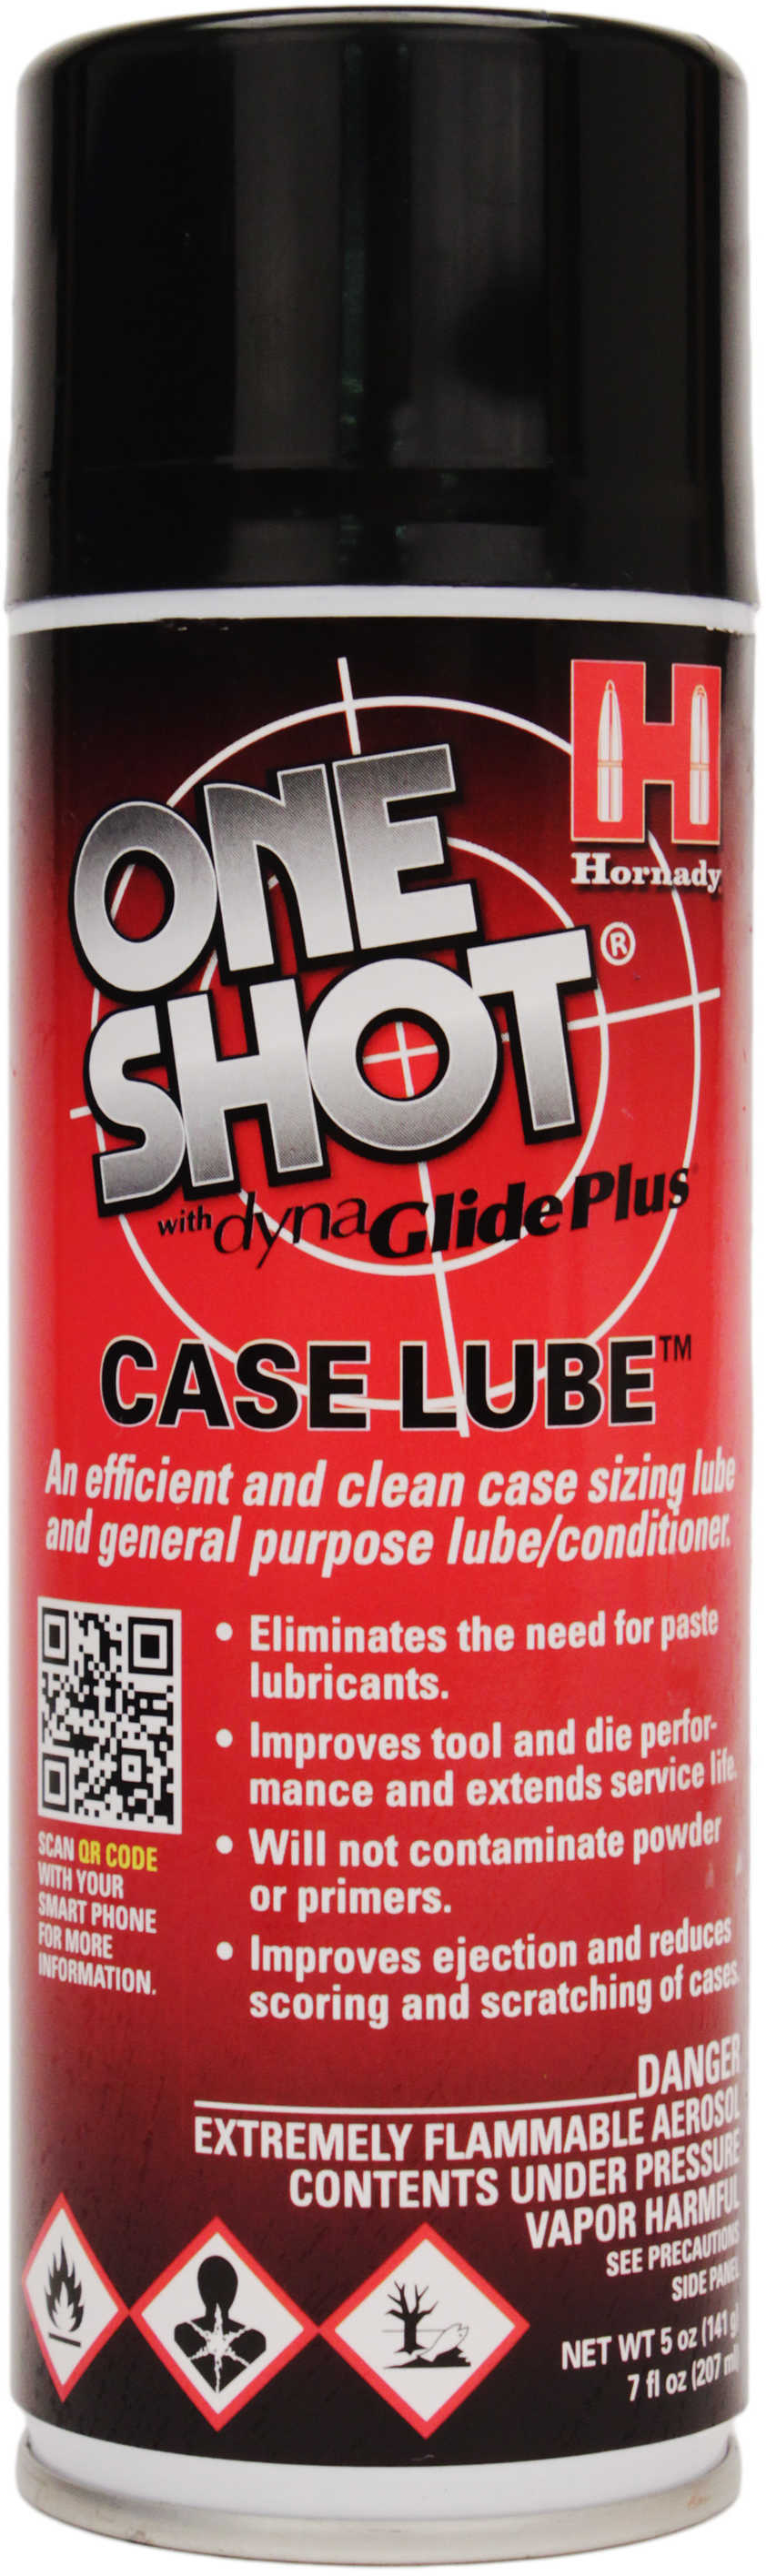 Hornady One Shot Spray Case Lube 5 oz 12/Case 9991